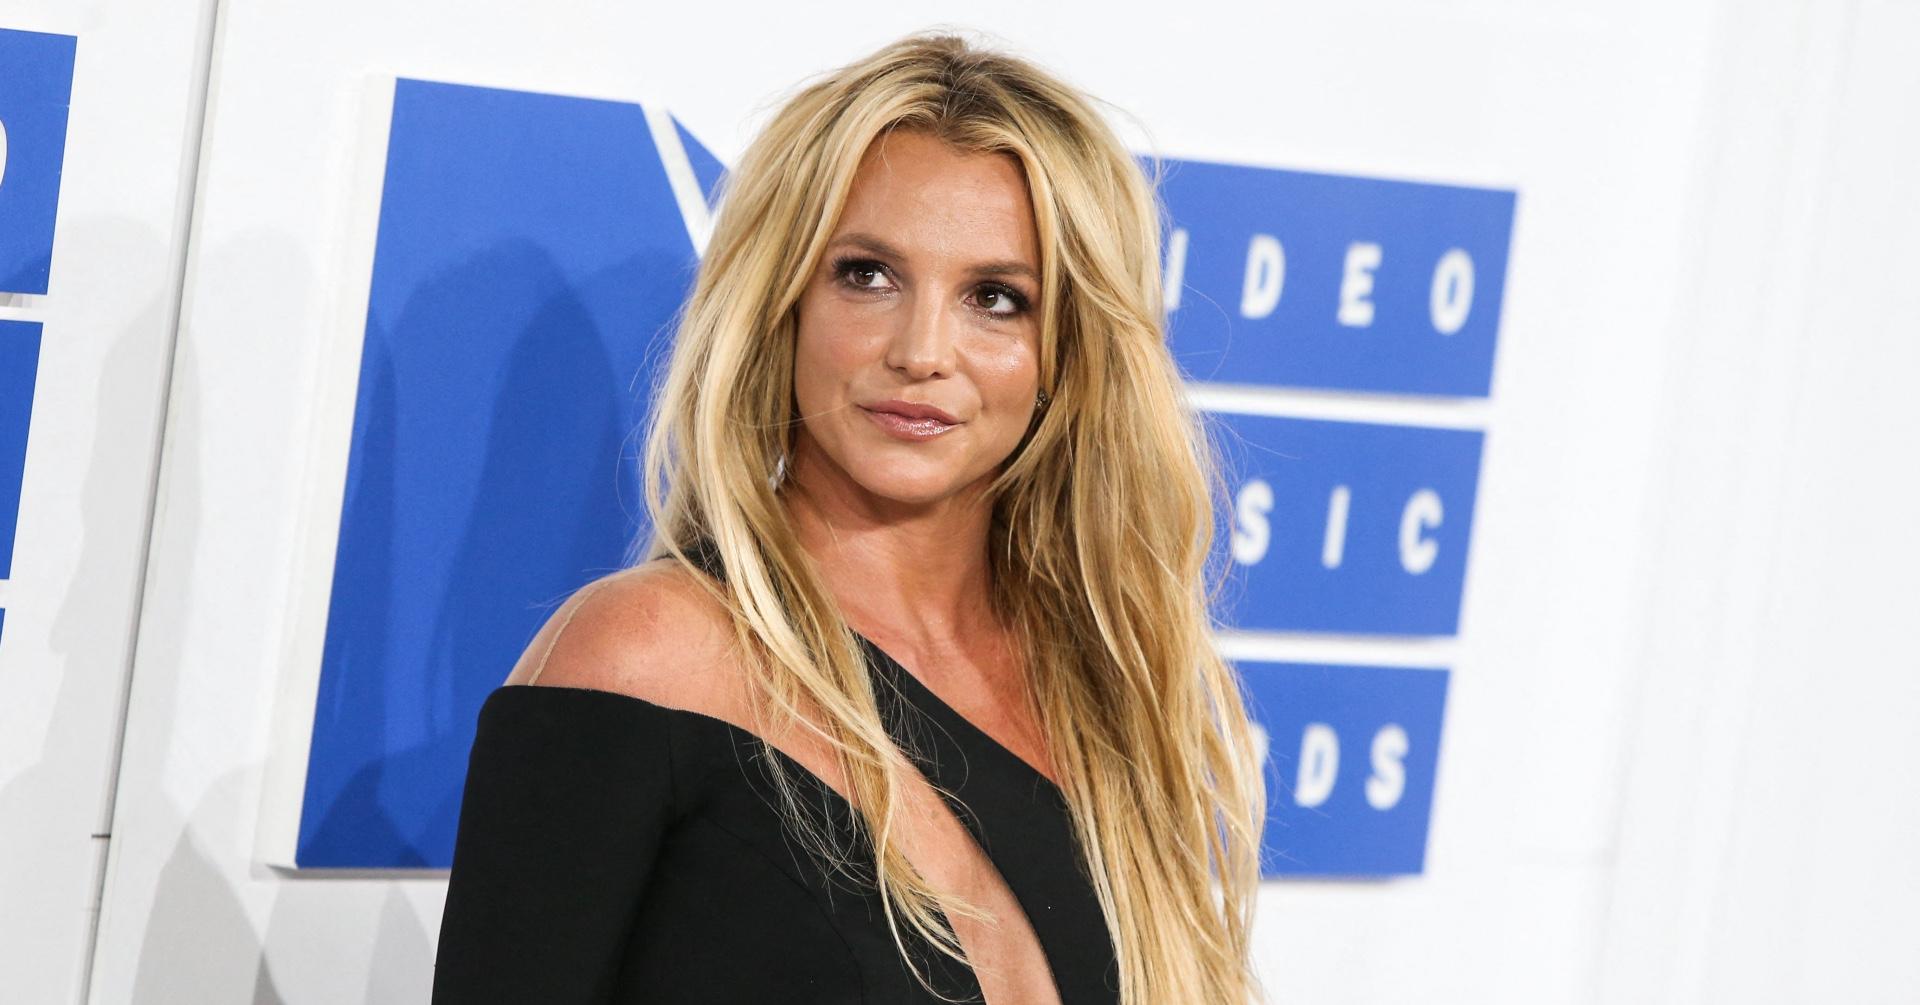 Jessica Simpson Is Hilariously Mistaken as Britney Spears by Fan